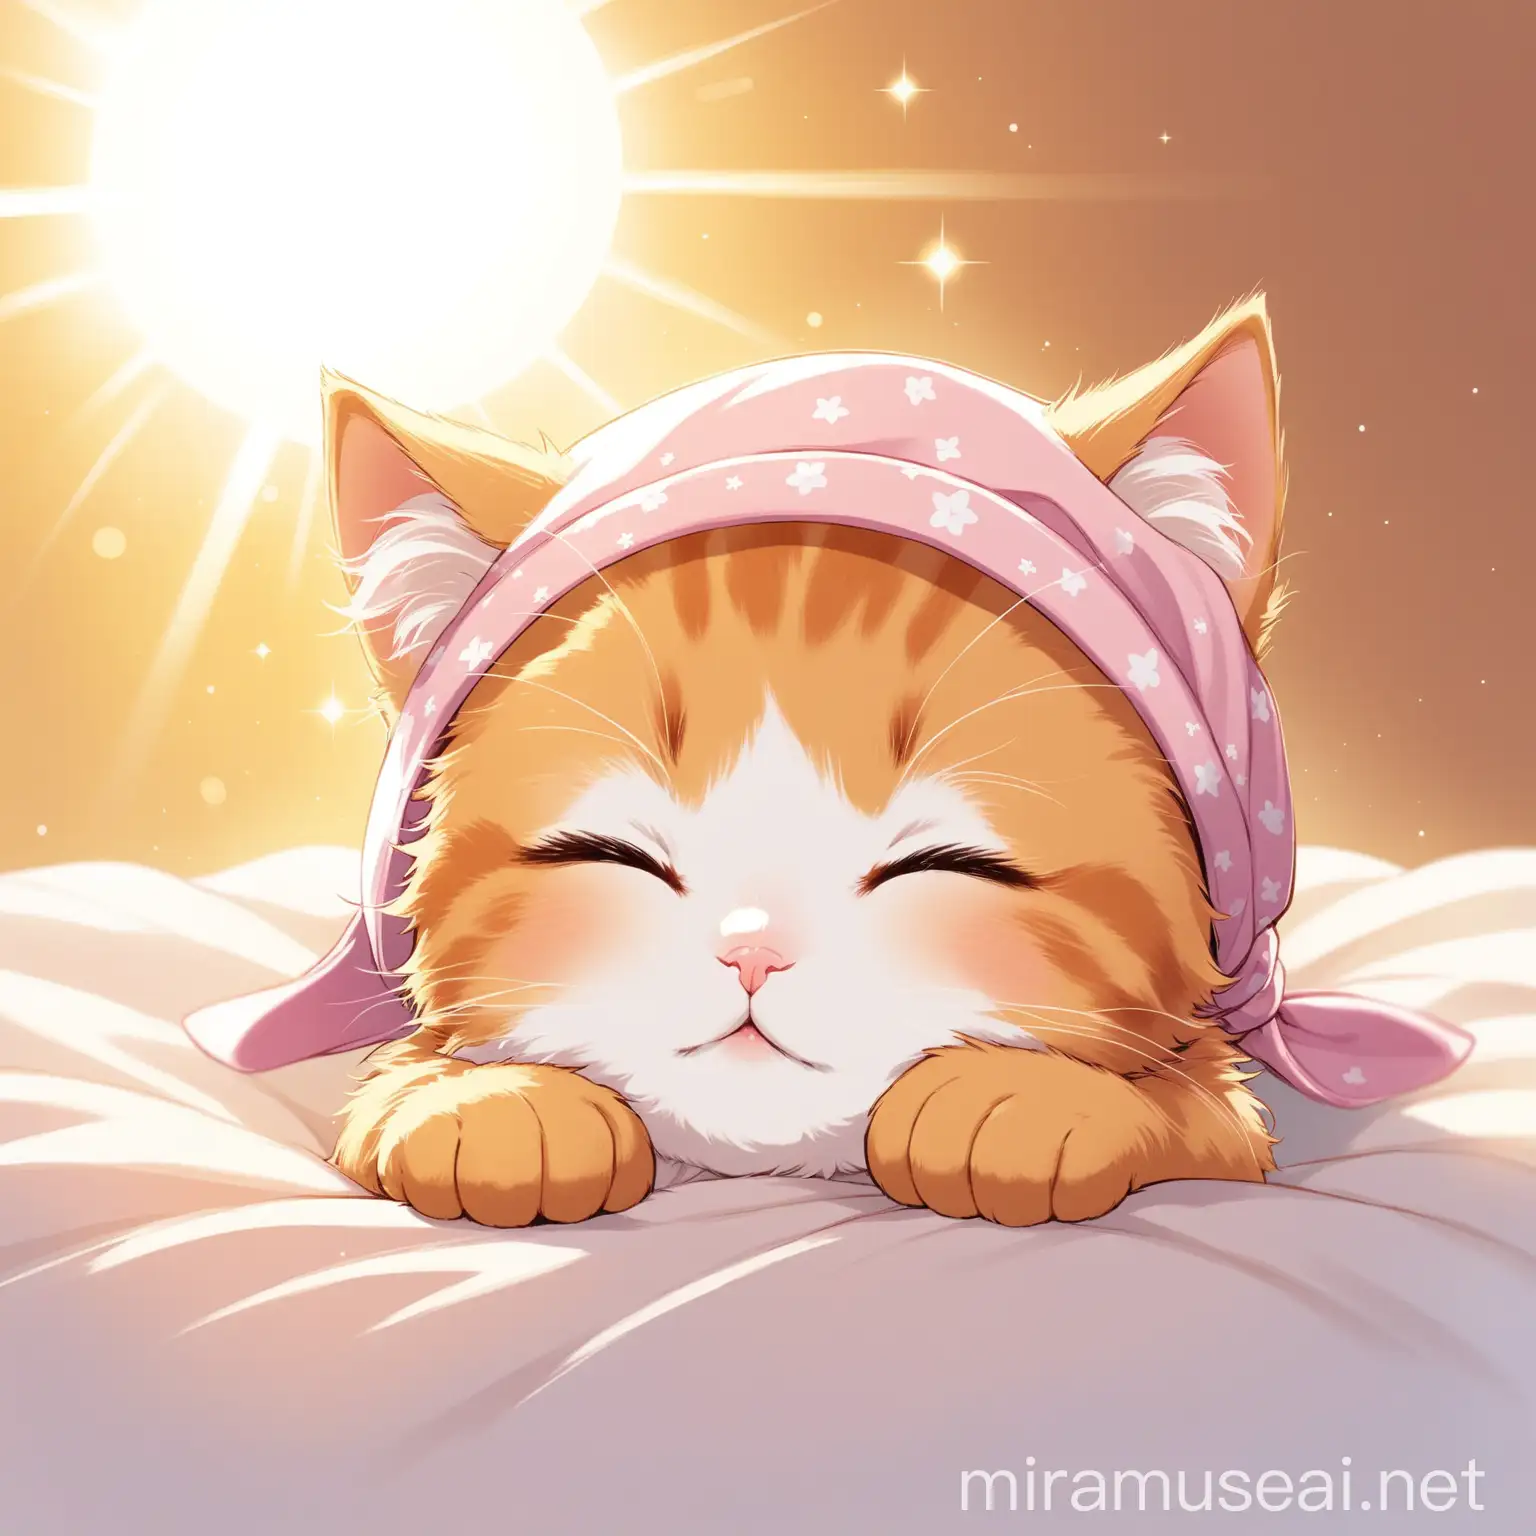 The sun is shining, the kitten woke up, stretching in its sleep cap.